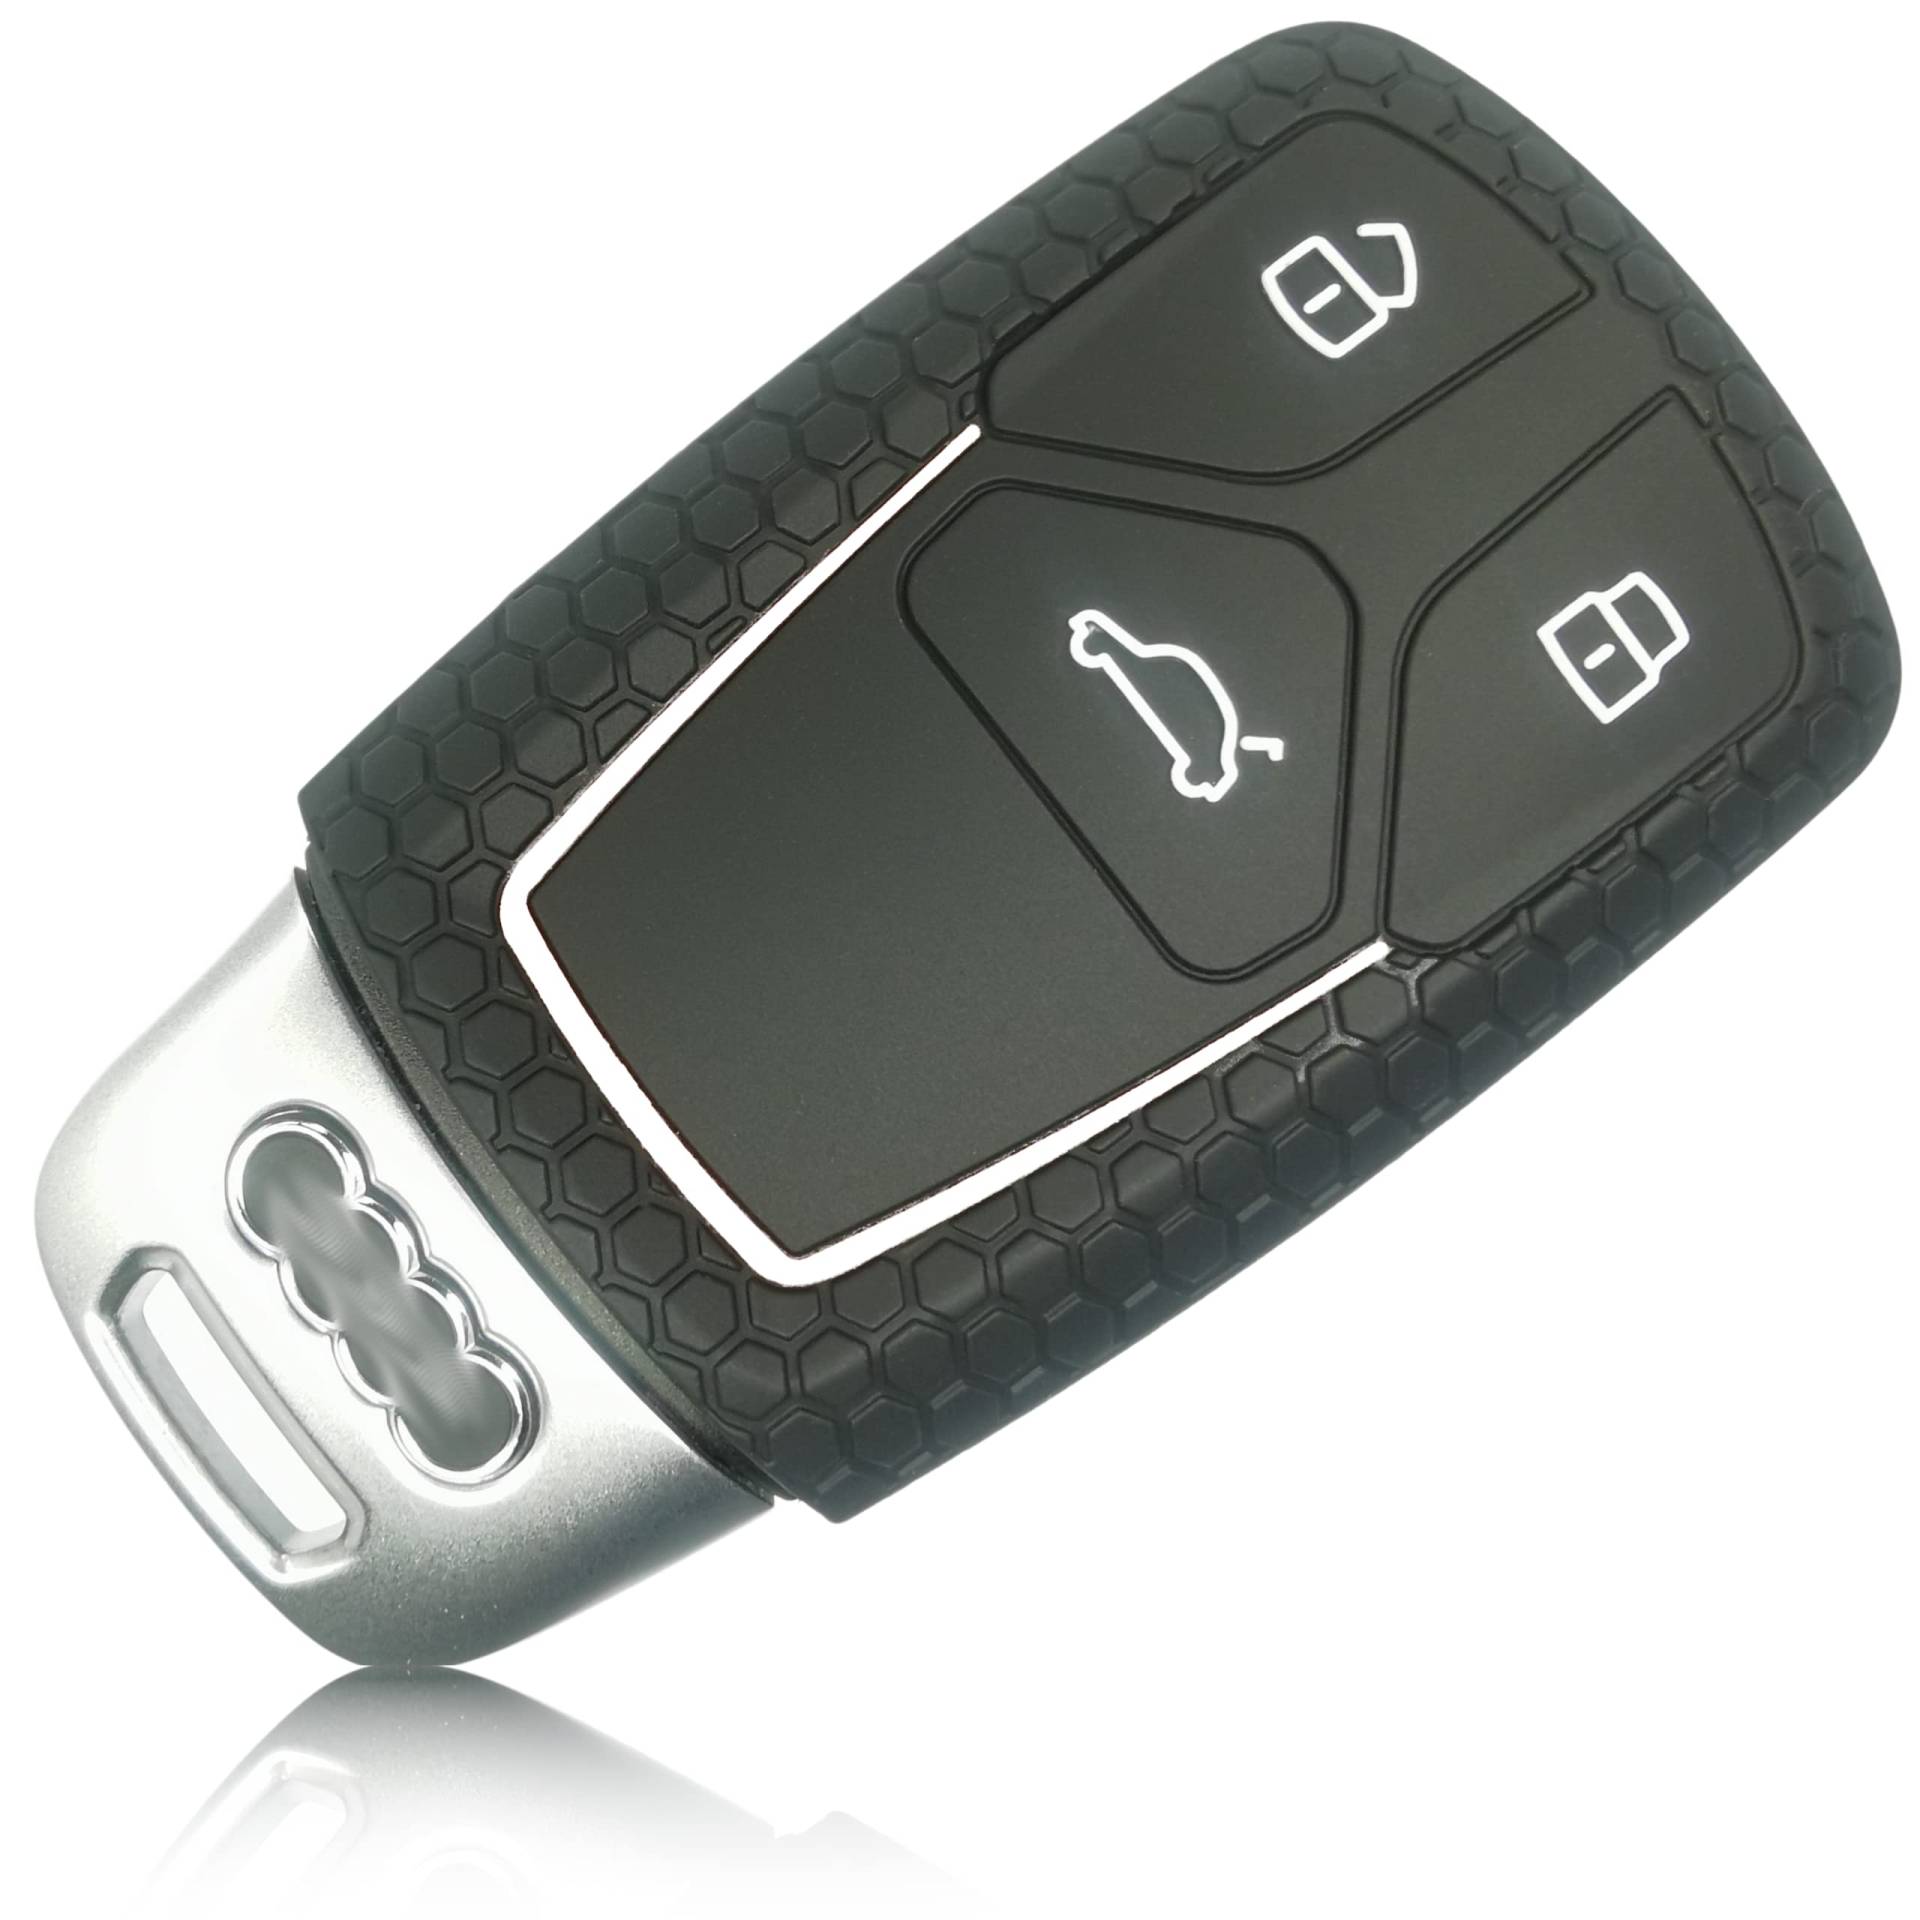 FOAMO Autoschlüssel Hülle kompatibel mit Audi 3-Tasten SmartKey (nur Keyless-Go) - Silikon Schutzhülle Cover Schlüssel-Hülle in Schwarz Weiß von FOAMO